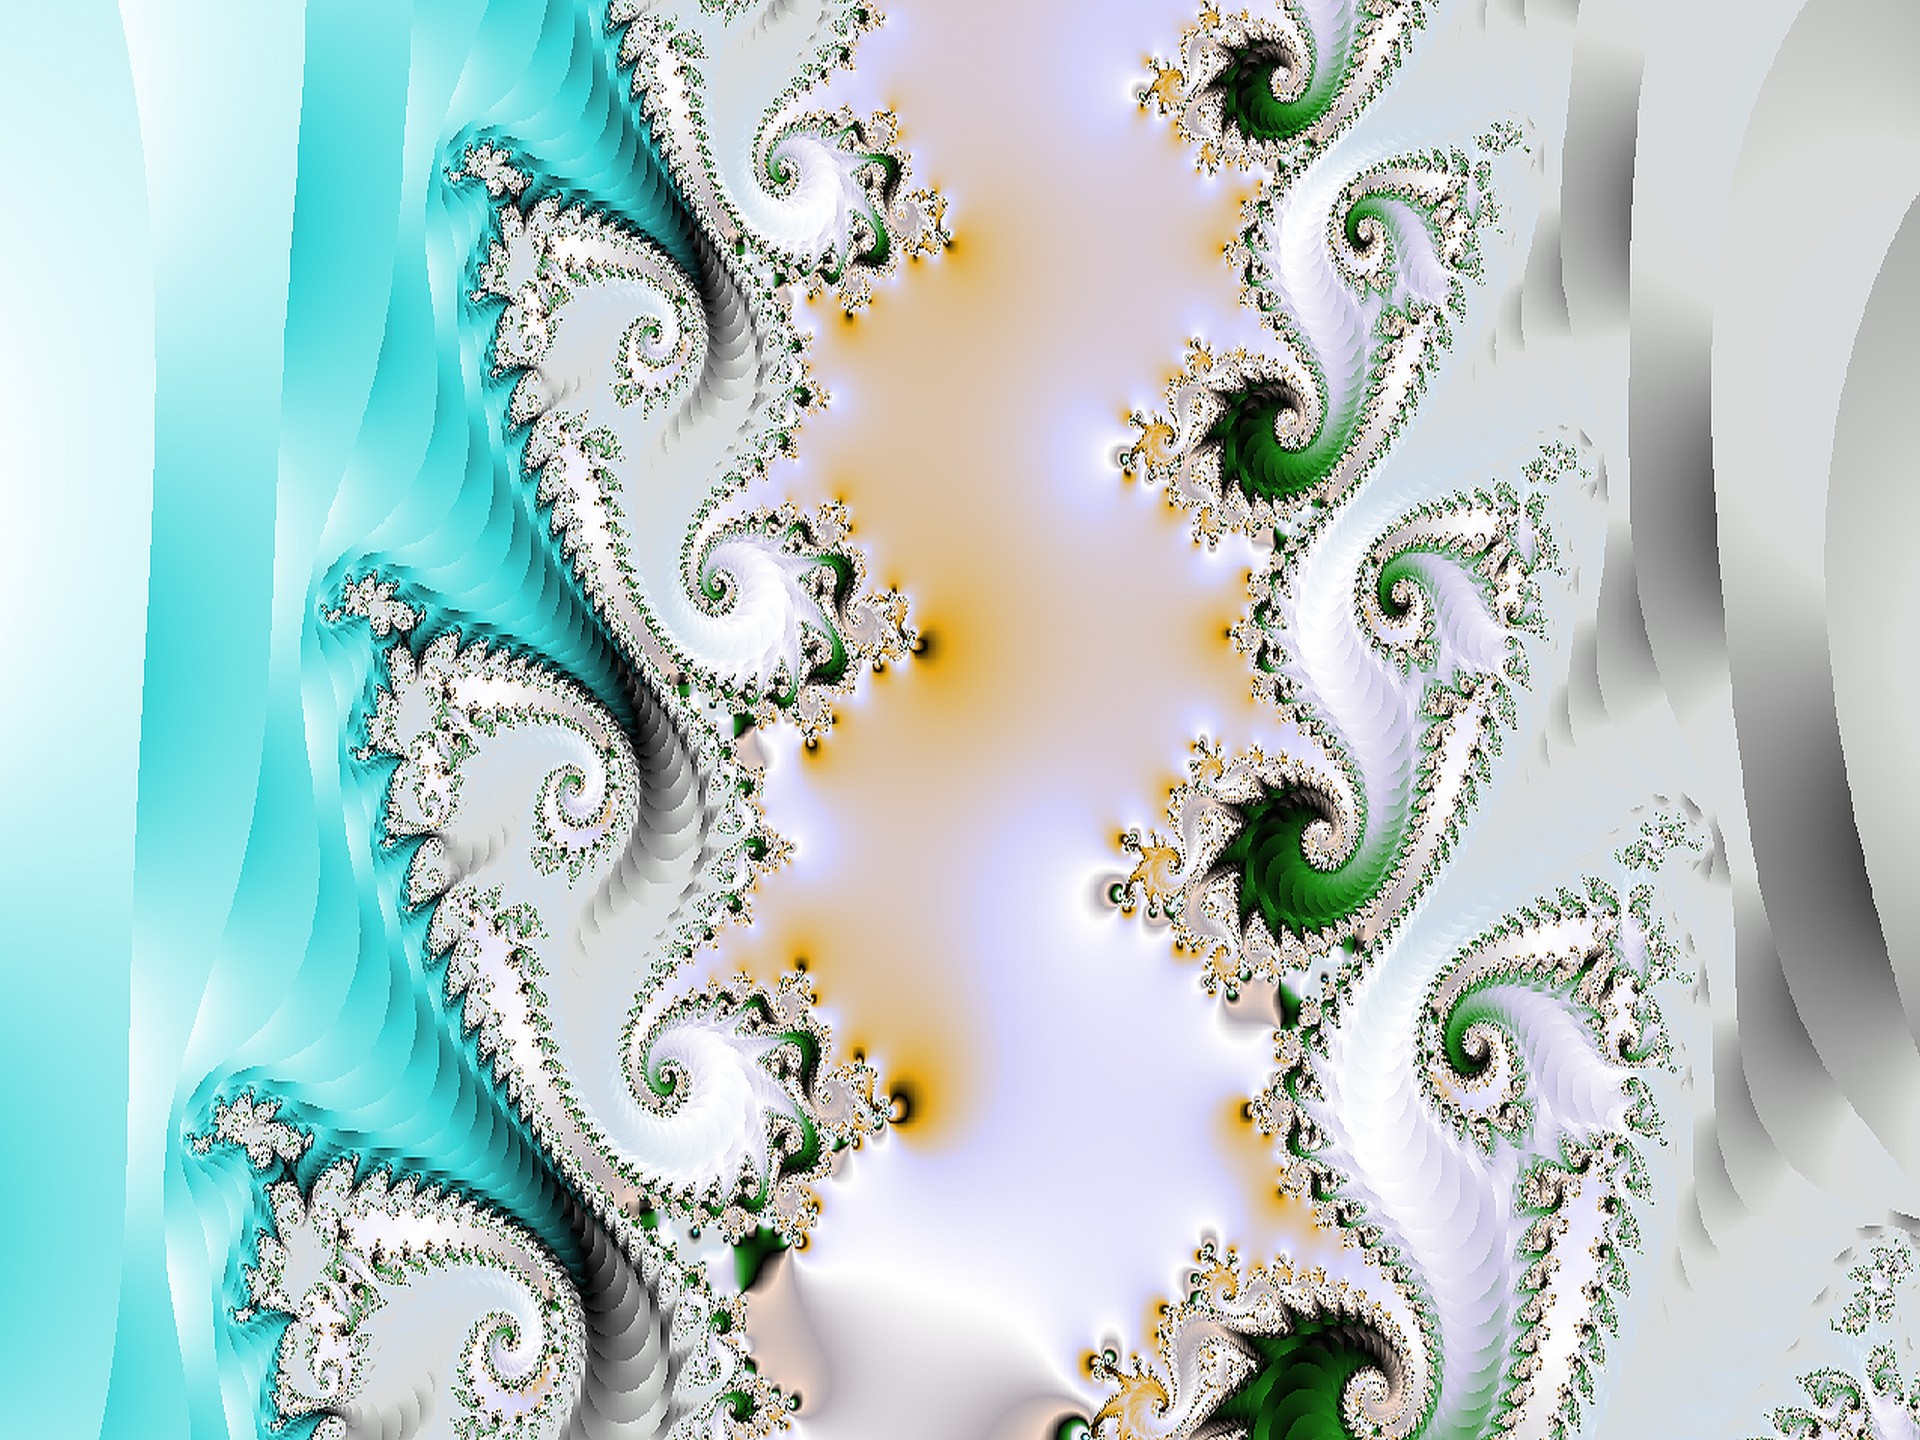 astronira digital fractal  xaos free photo